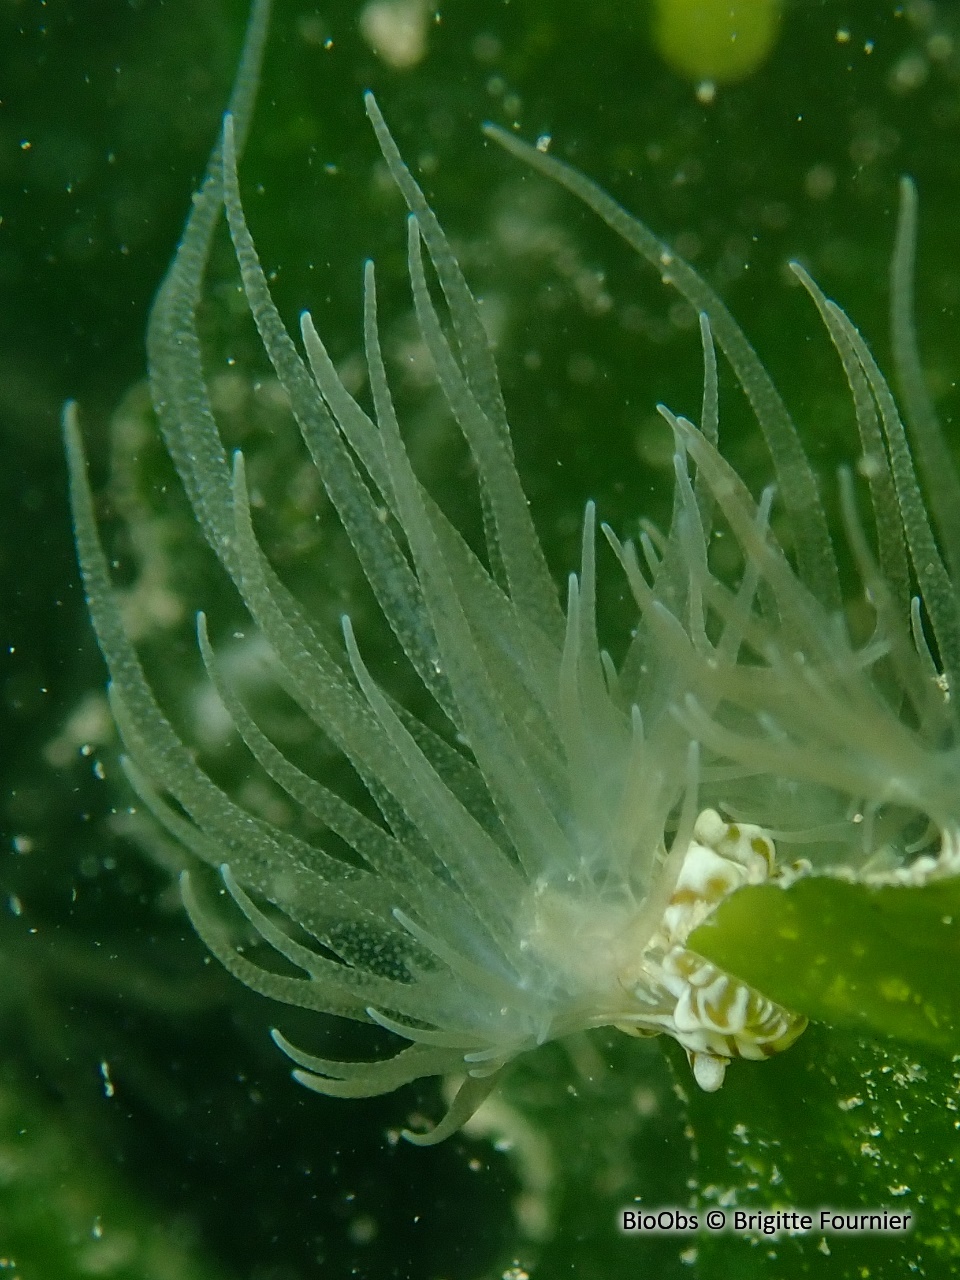 Anémone naine verruqueuse de Méditerranée - Bunodeopsis strumosa - Brigitte Fournier - BioObs